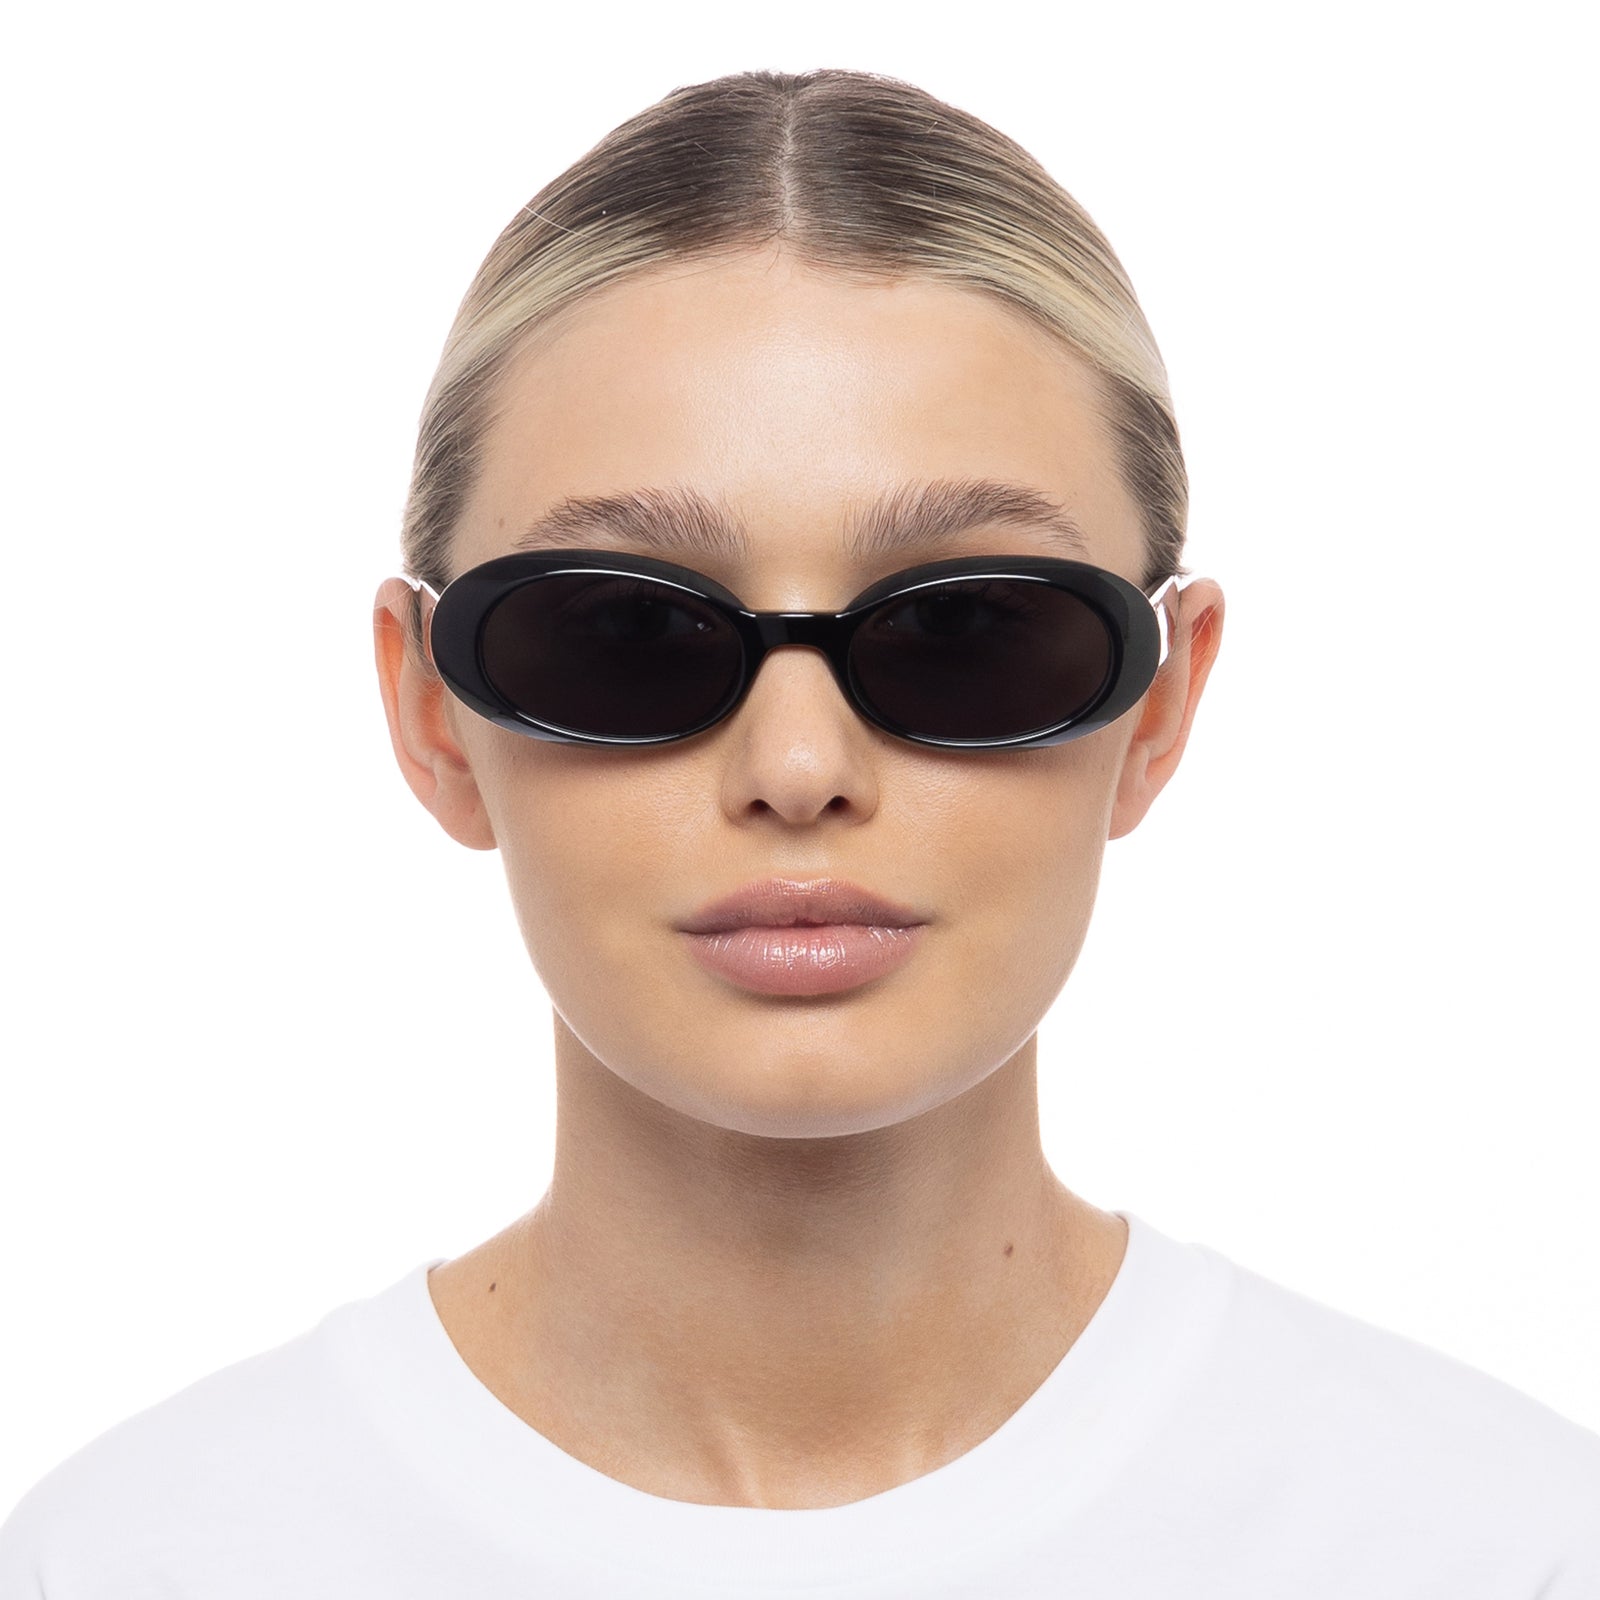 Specs Work Uni-Sex | It! Sunglasses Le Black Oval